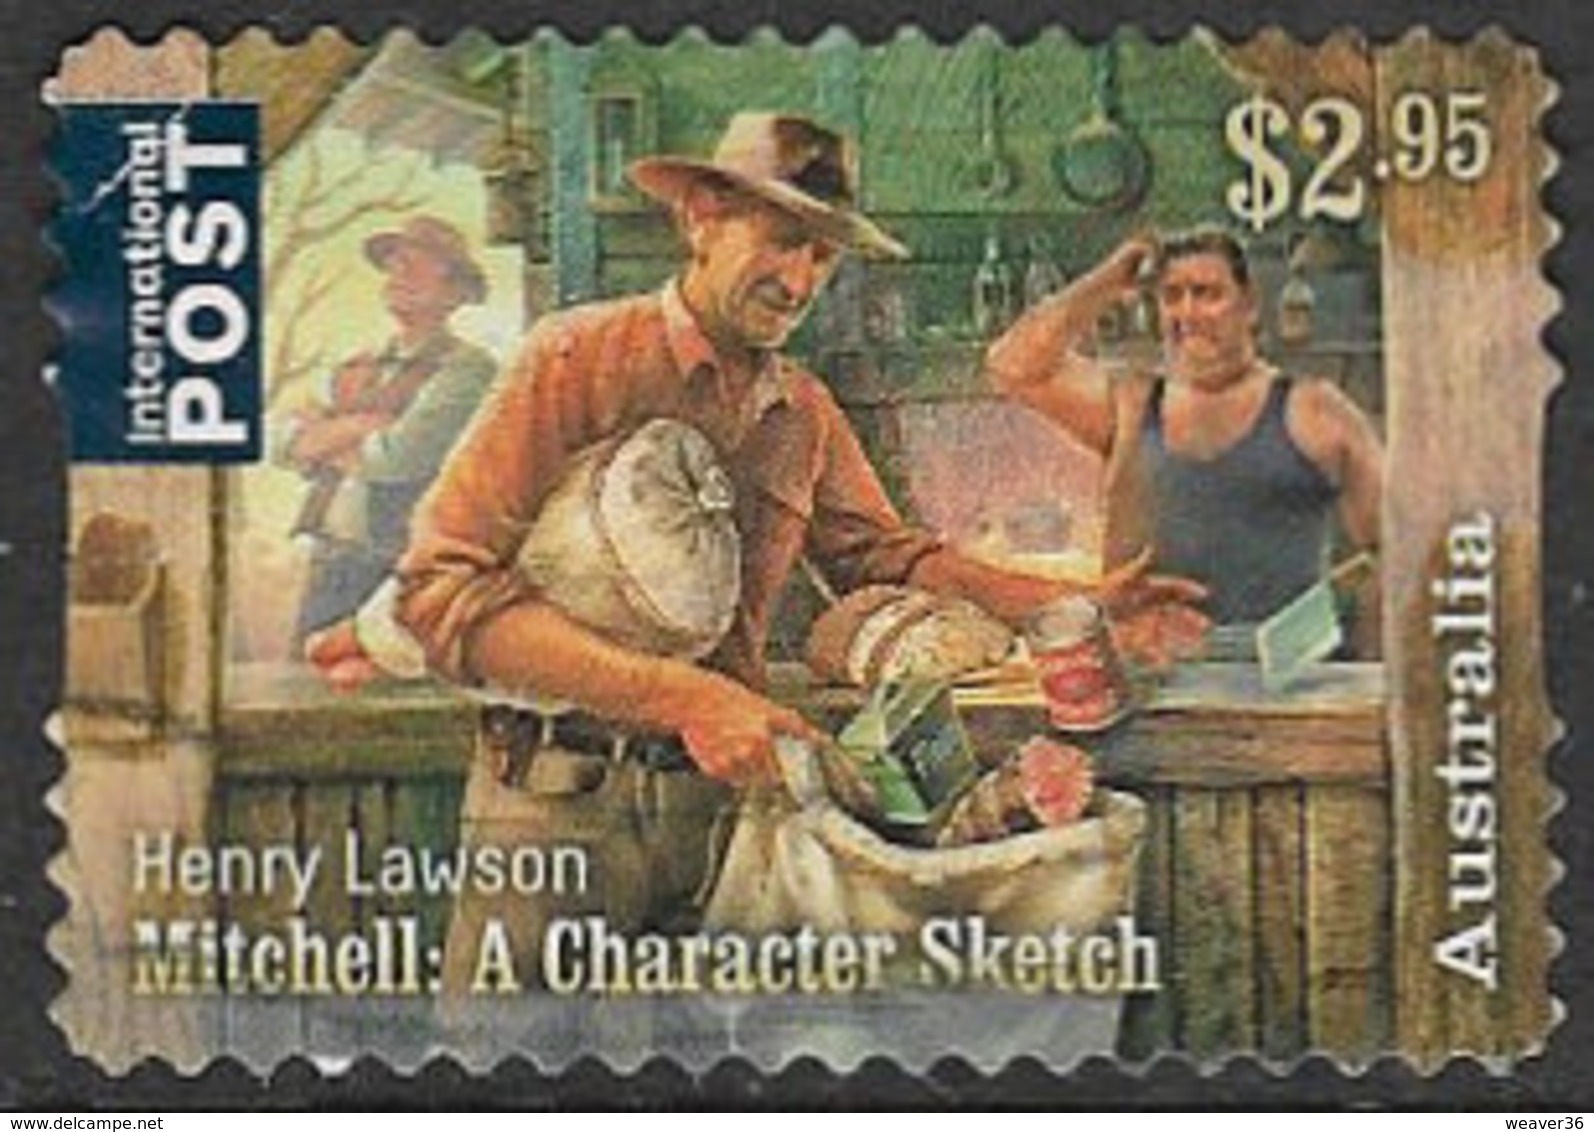 Australia 2017 Henry Lawson $2.95 Self Adhesive Good/fine Used [38/31226/ND] - Used Stamps